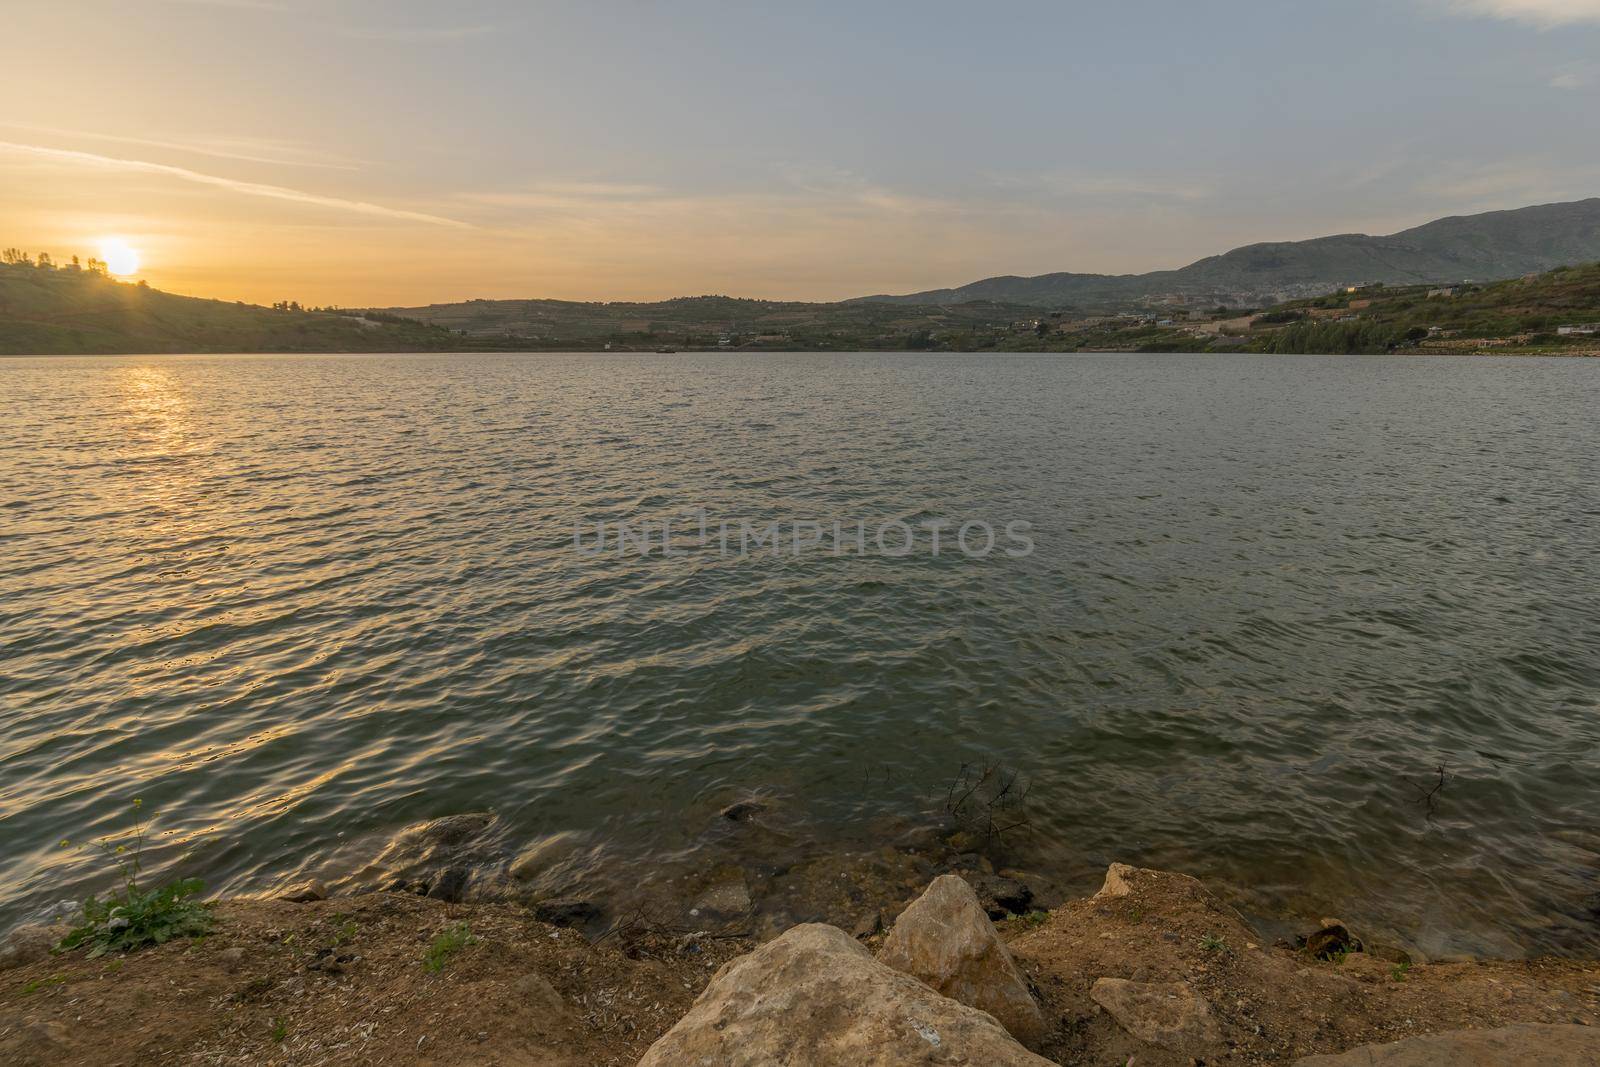 Sunset view of Lake Ram (Ram Pool), the Golan Heights by RnDmS